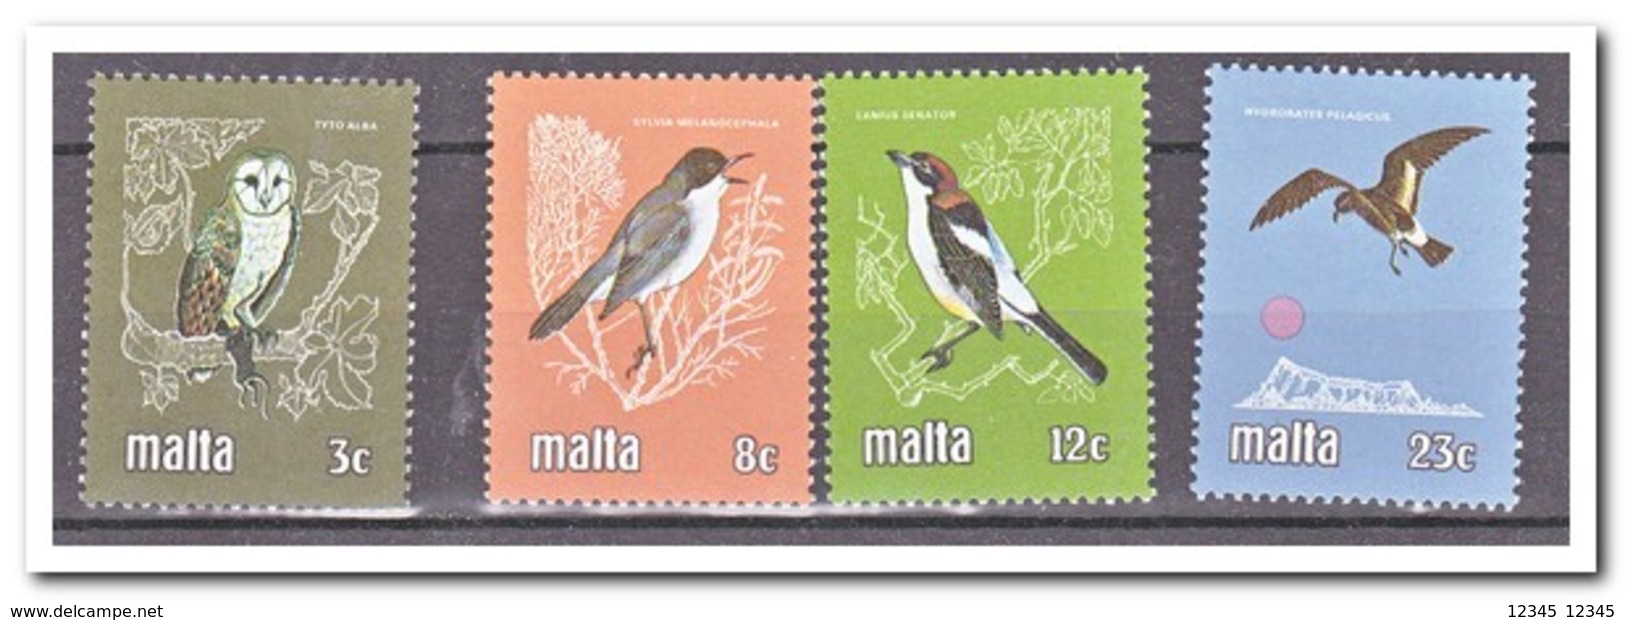 Malta 1981, Postfris MNH, Birds - Malte